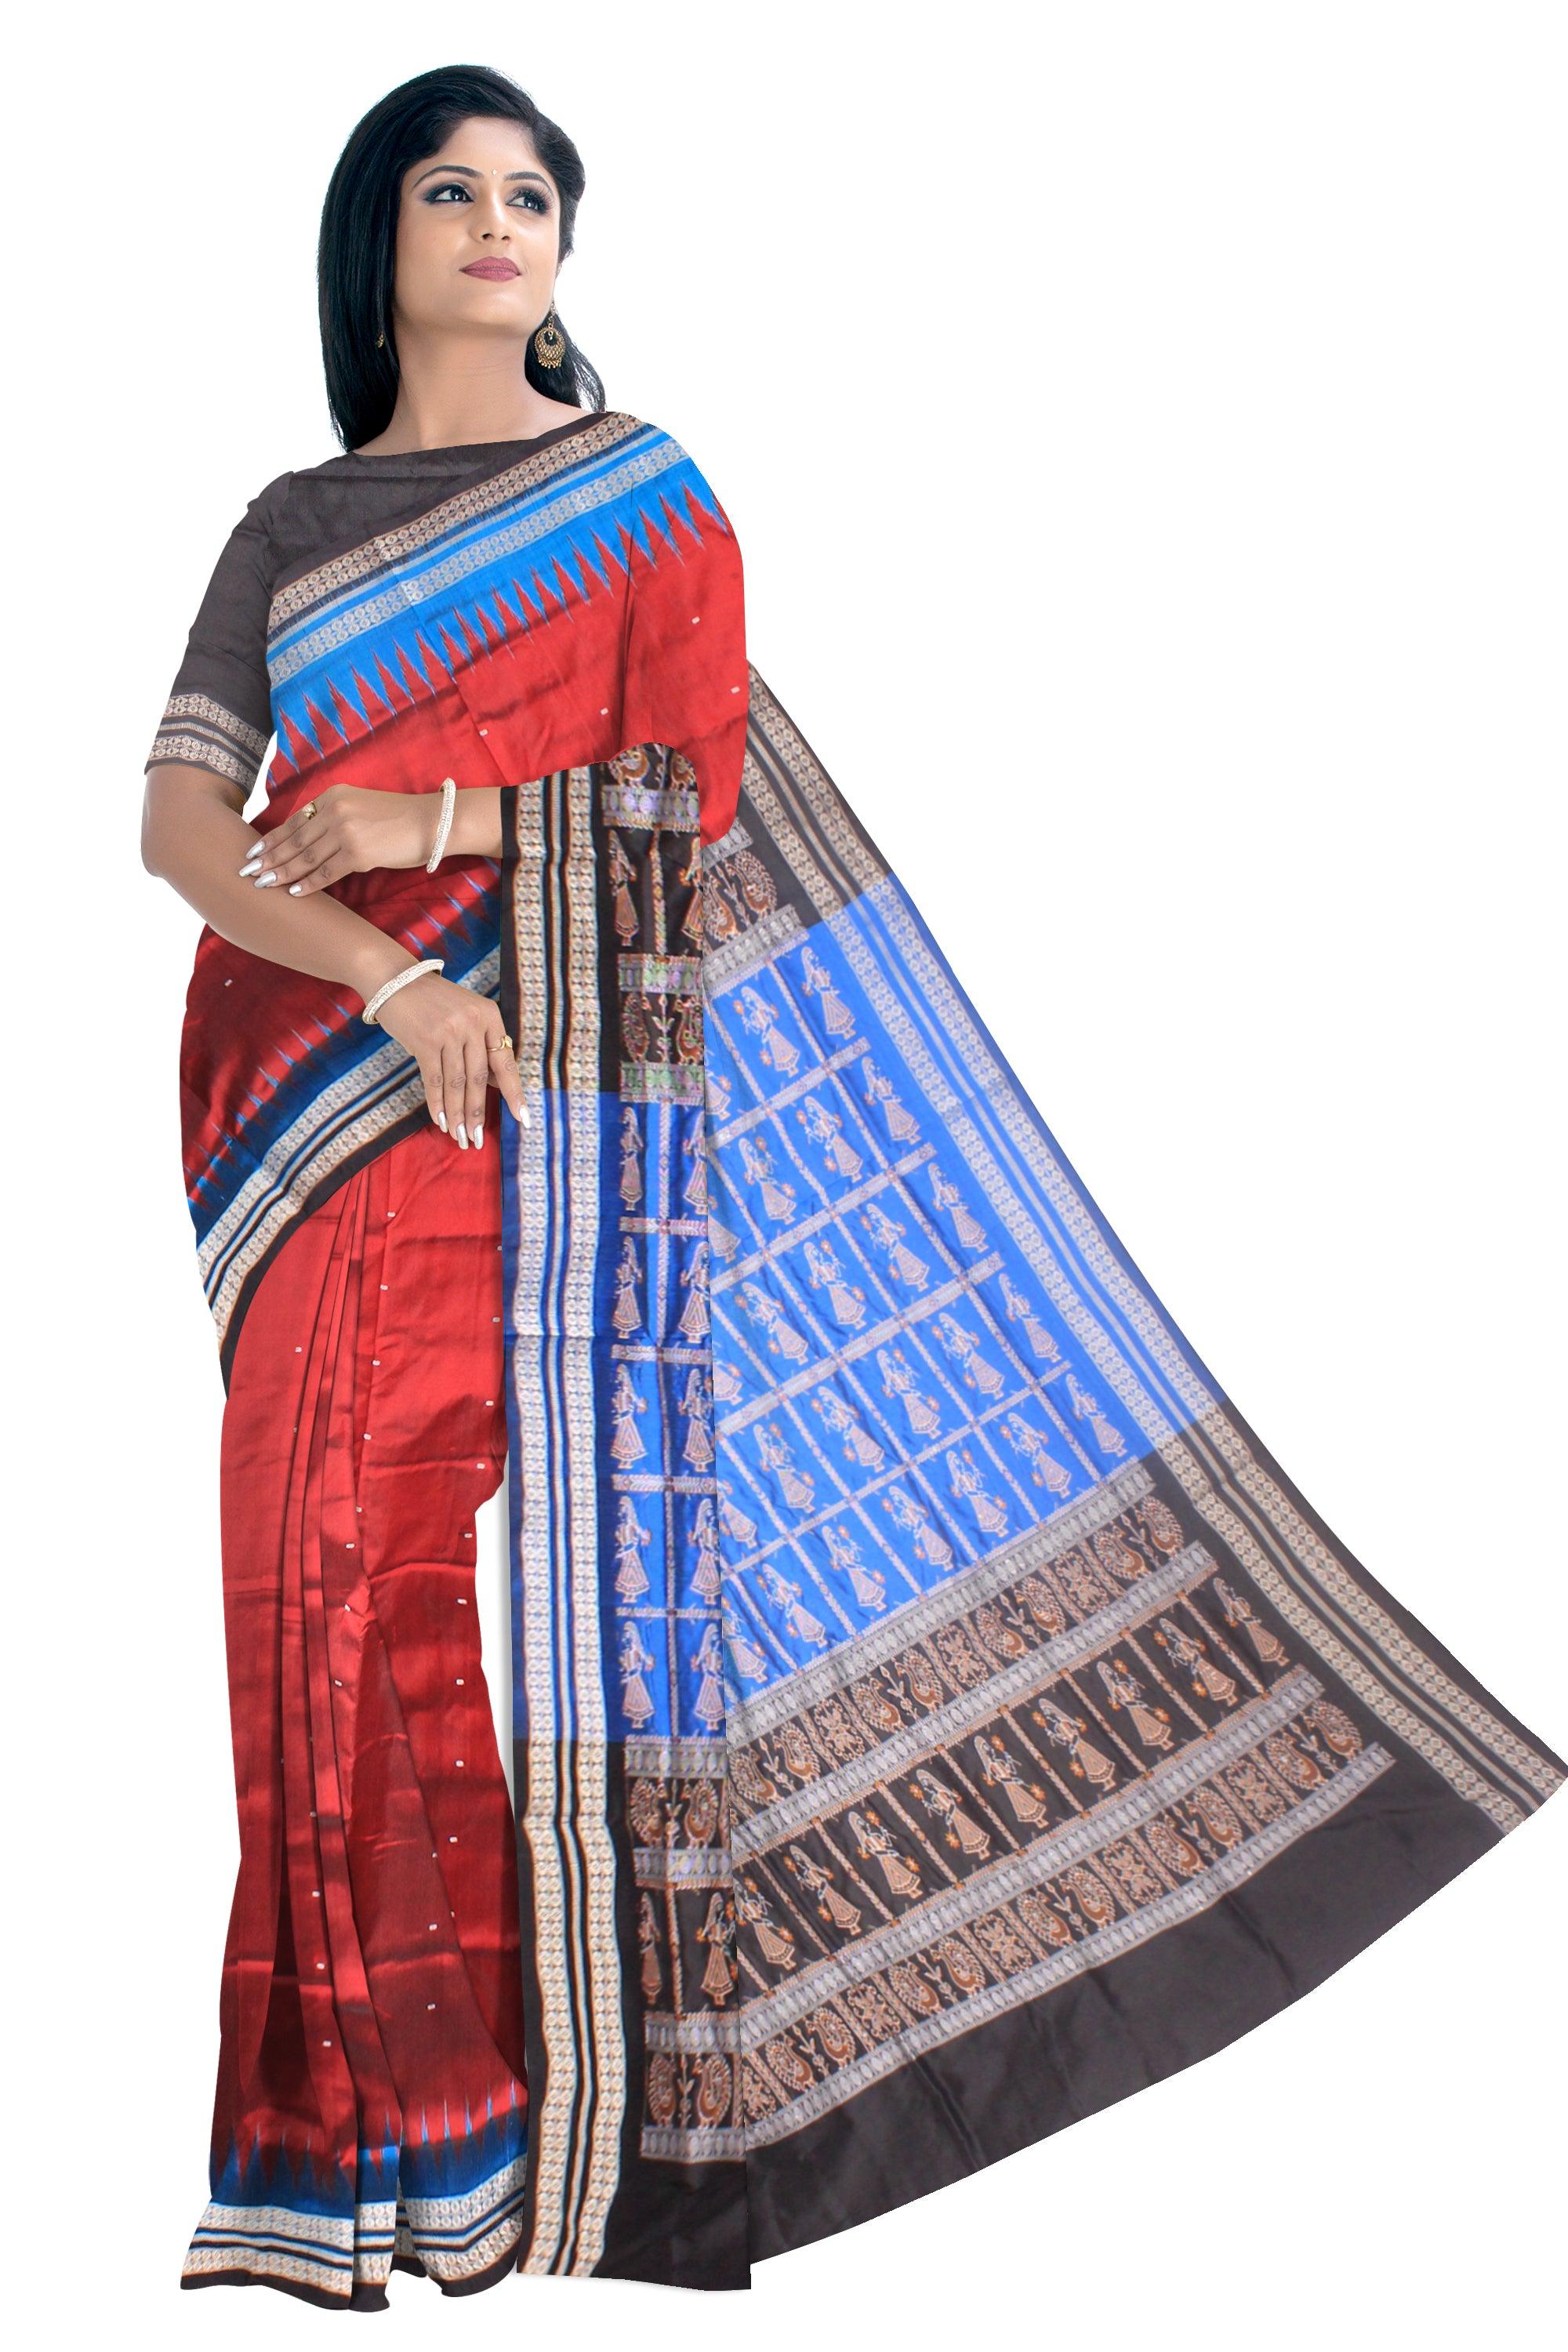 Sambalpuri Pata Saree in Maroon Color with  booty design full  body   with blouse piece. - Koshali Arts & Crafts Enterprise